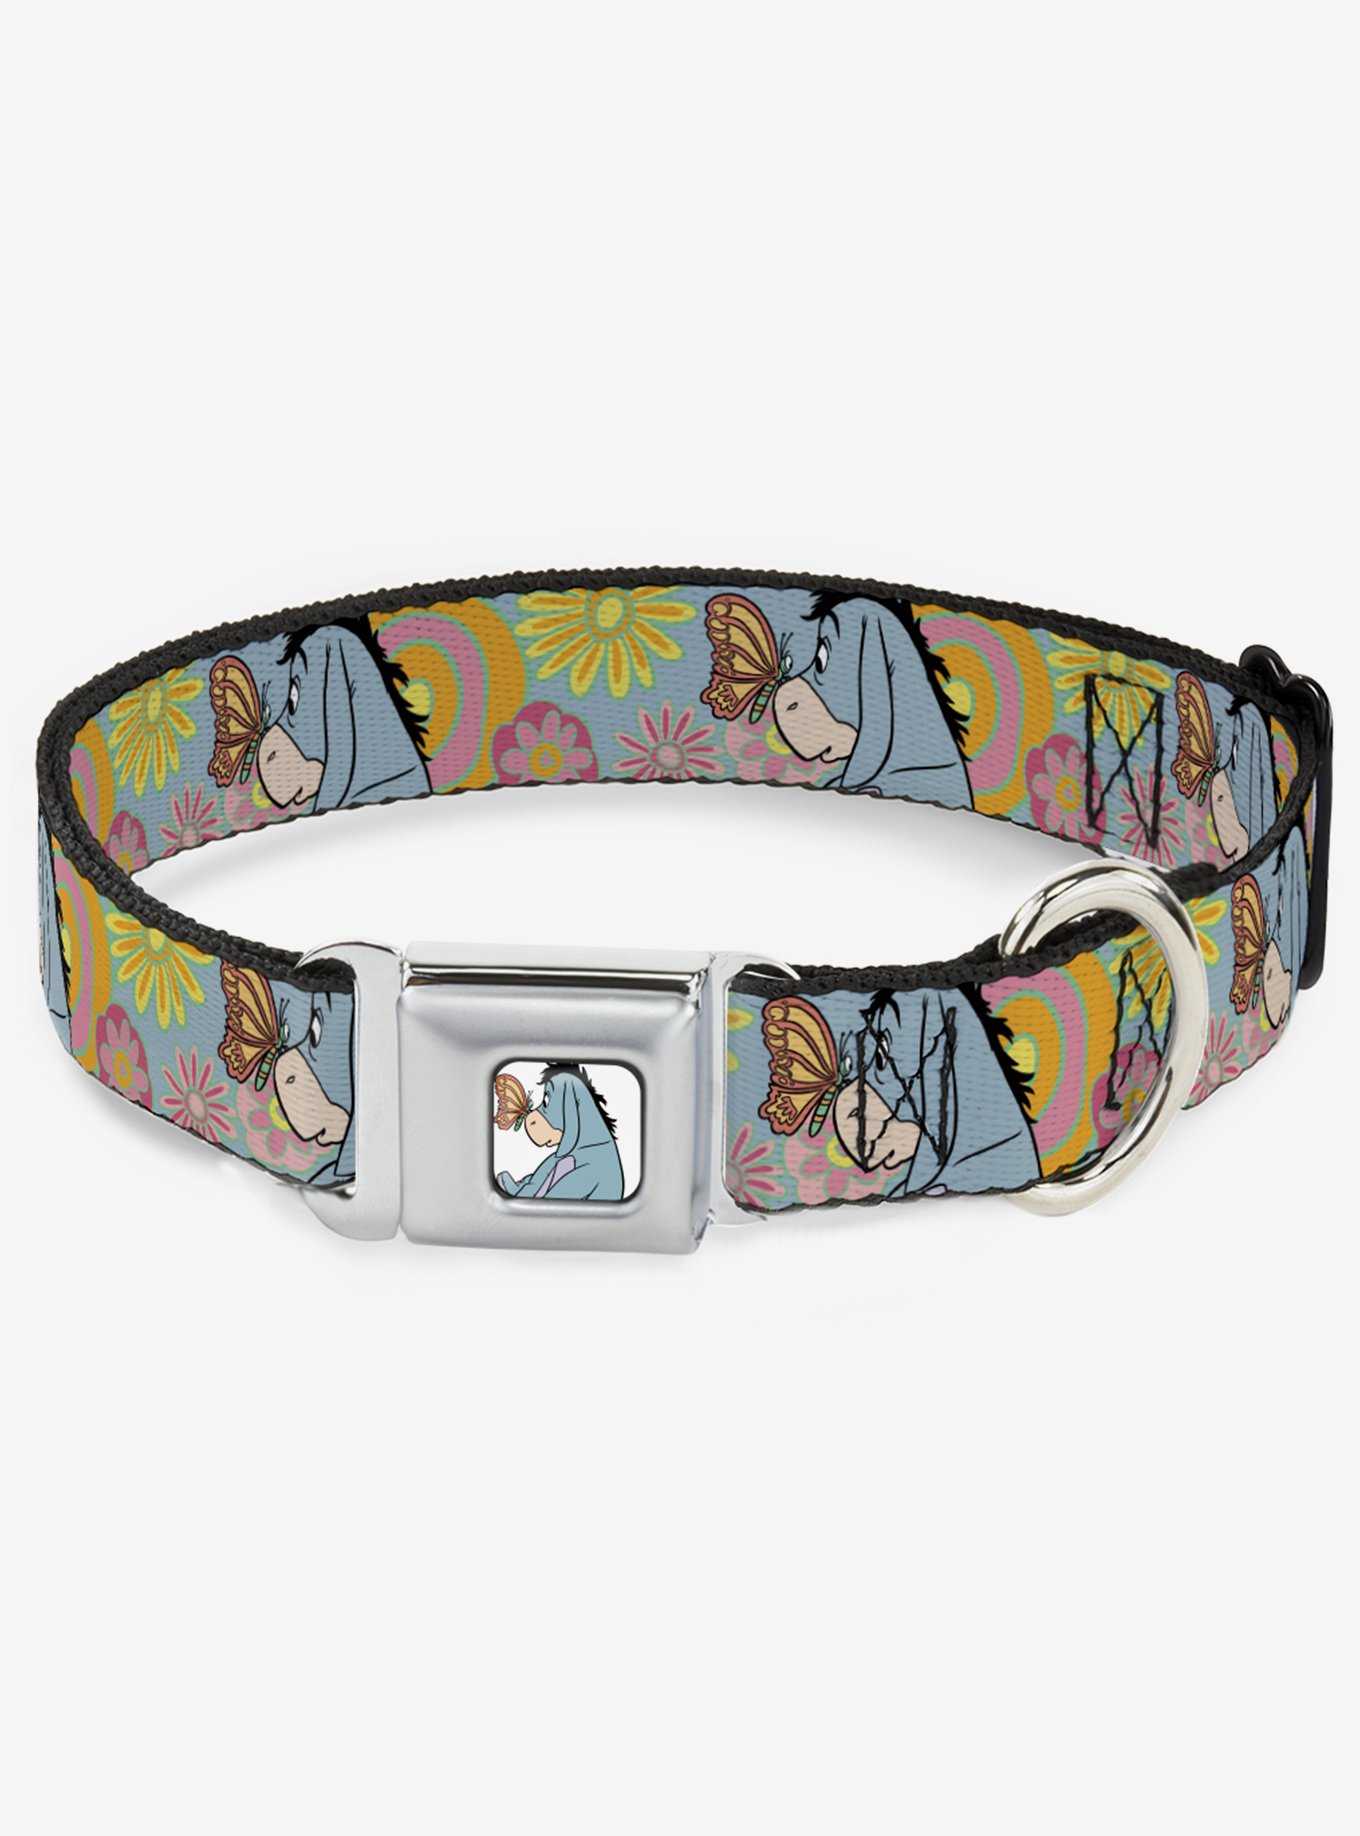 Disney Winnie The Pooh Eeyore Butterfly Seatbelt Buckle Dog Collar, , hi-res